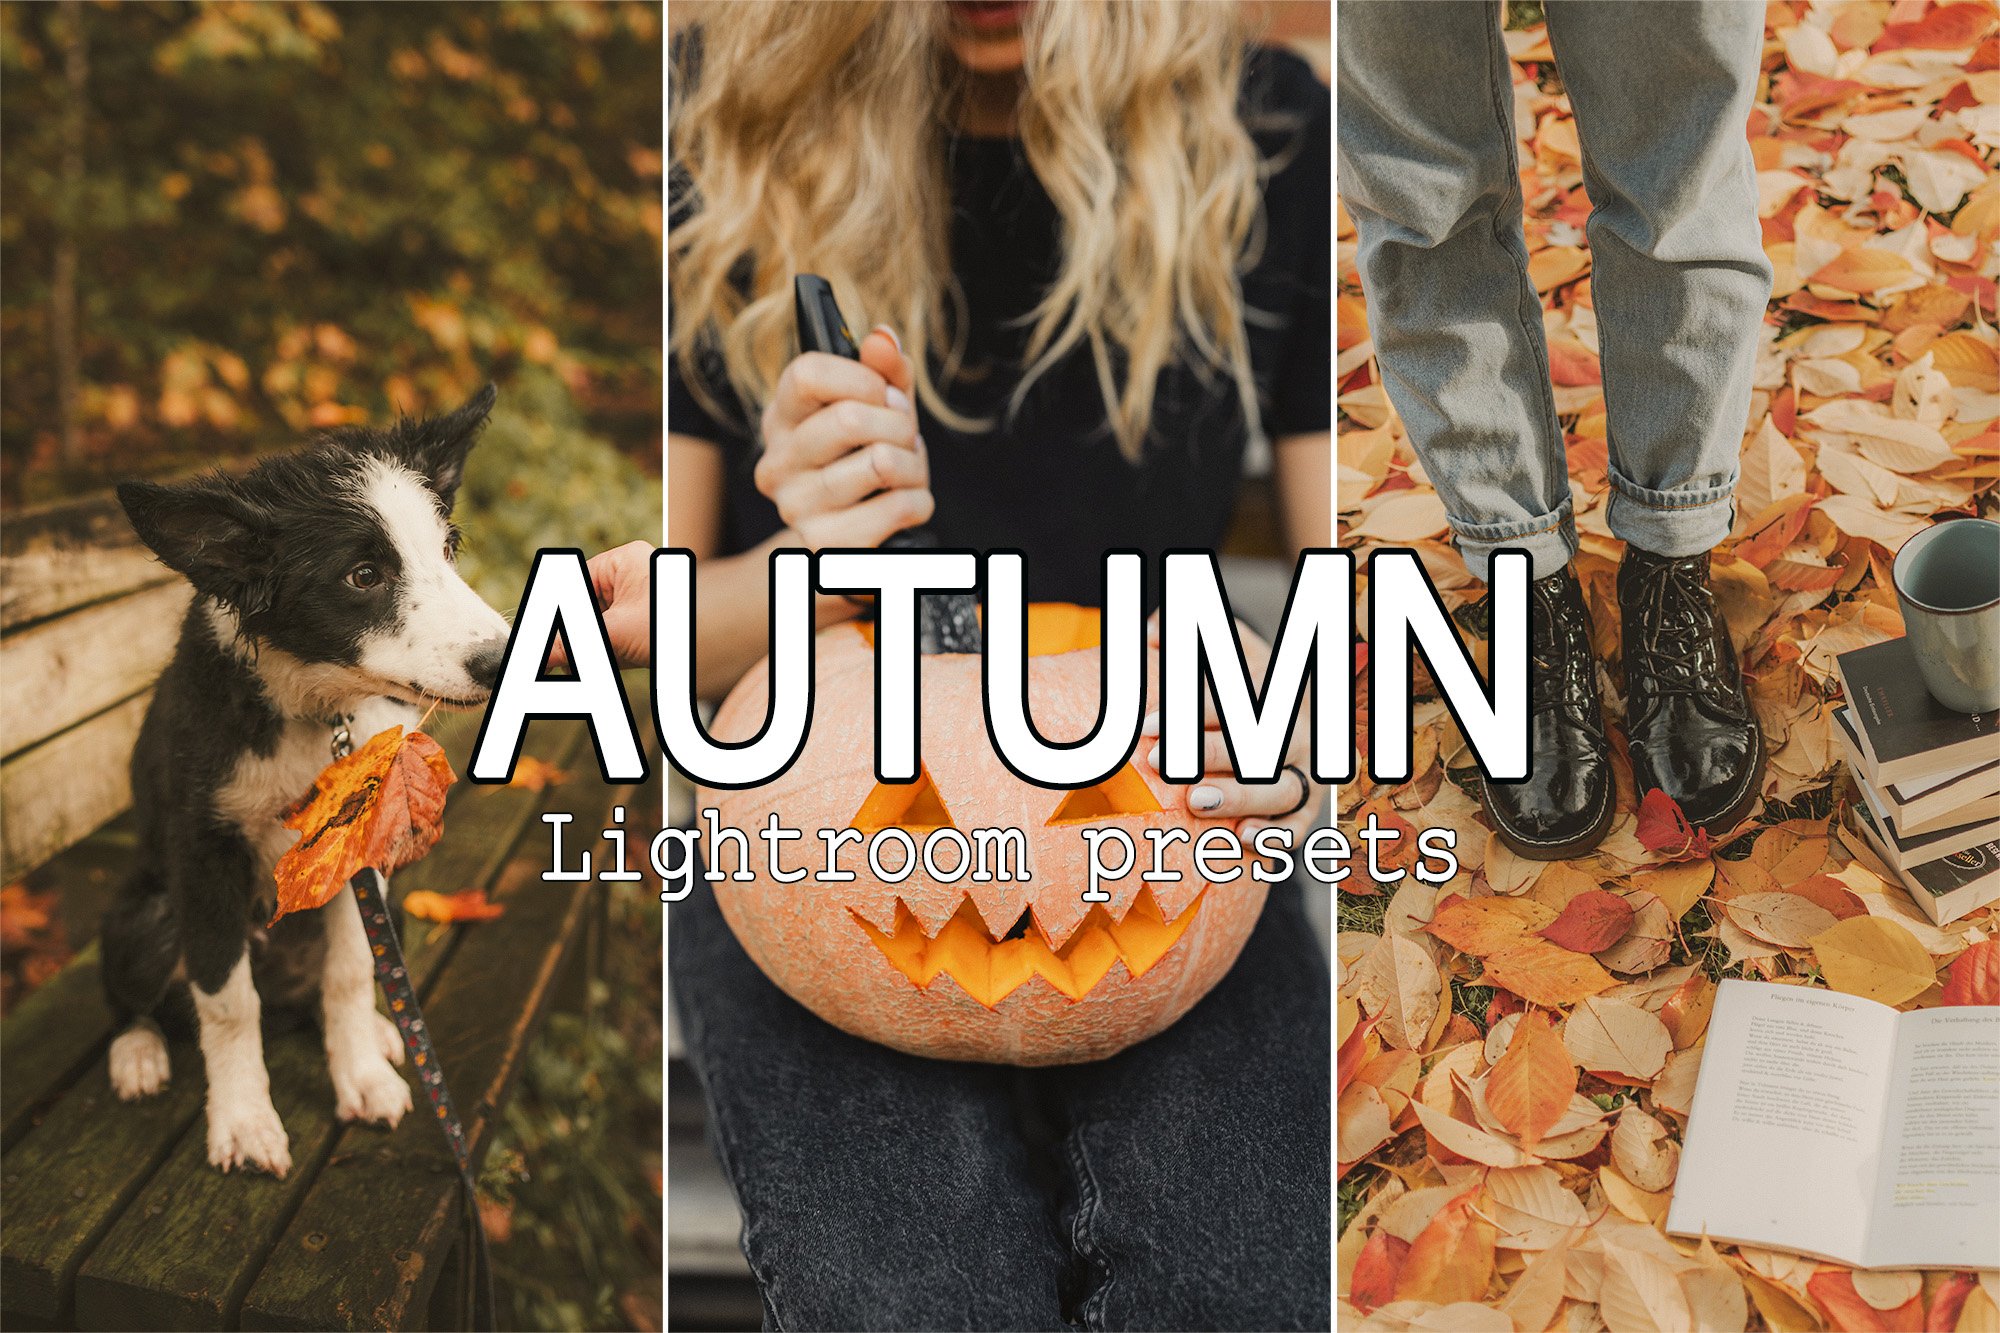 9 Autumn Lightroom Mobile Presetscover image.